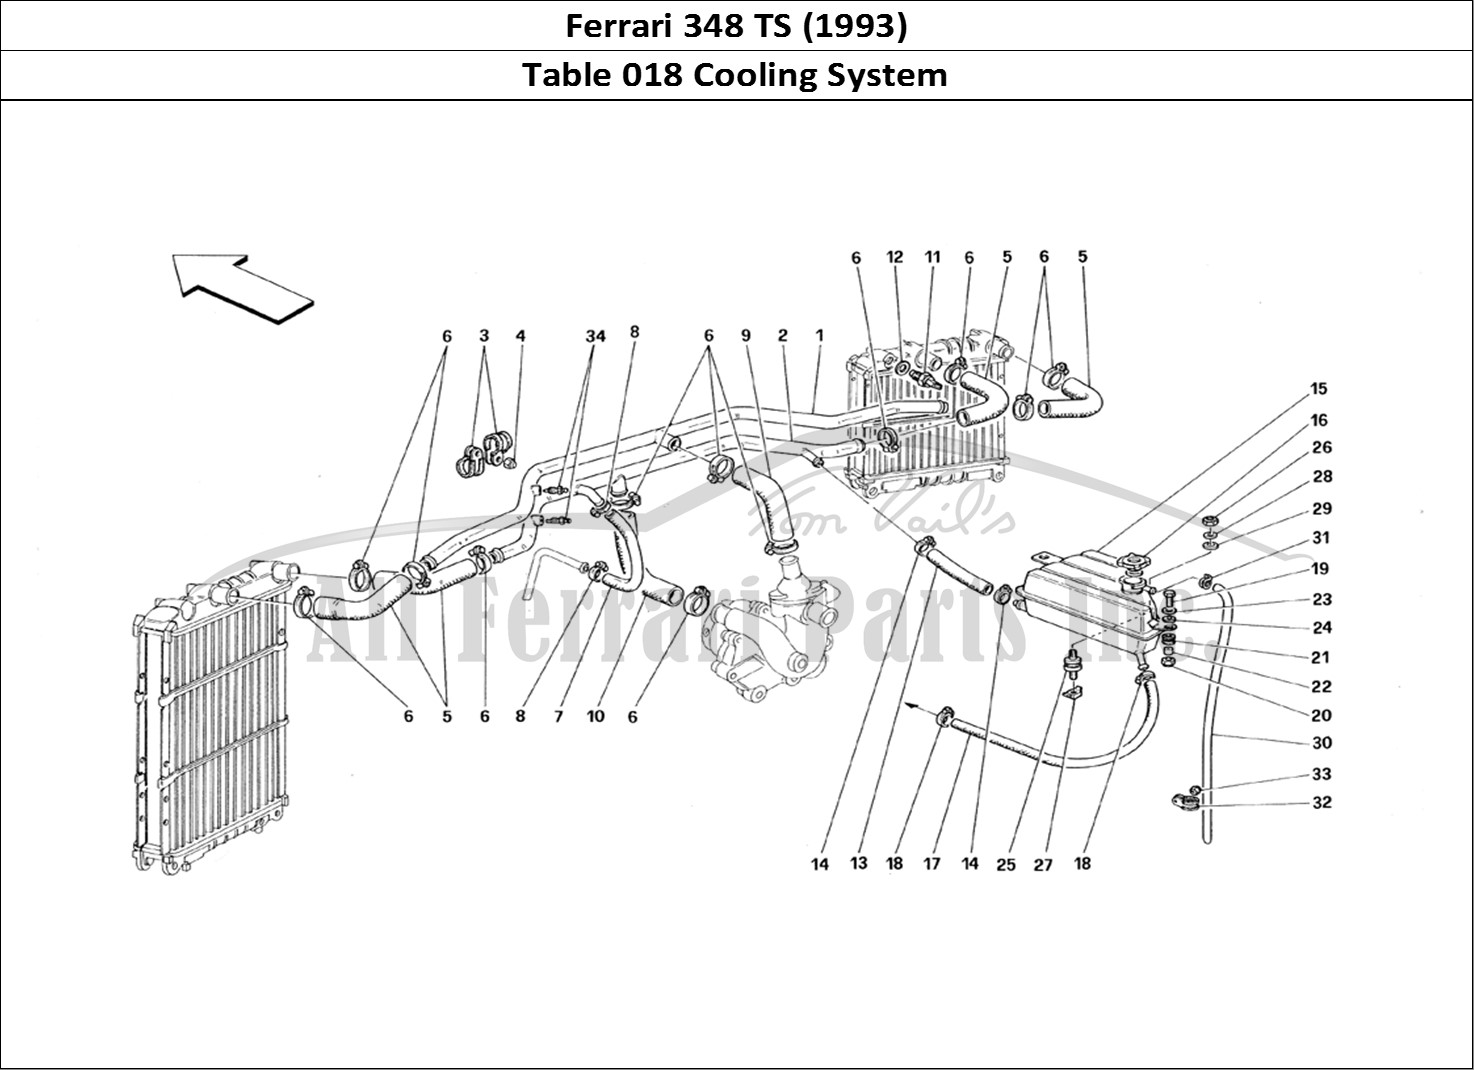 Ferrari Parts Ferrari 348 TB (1993) Page 018 Cooling System